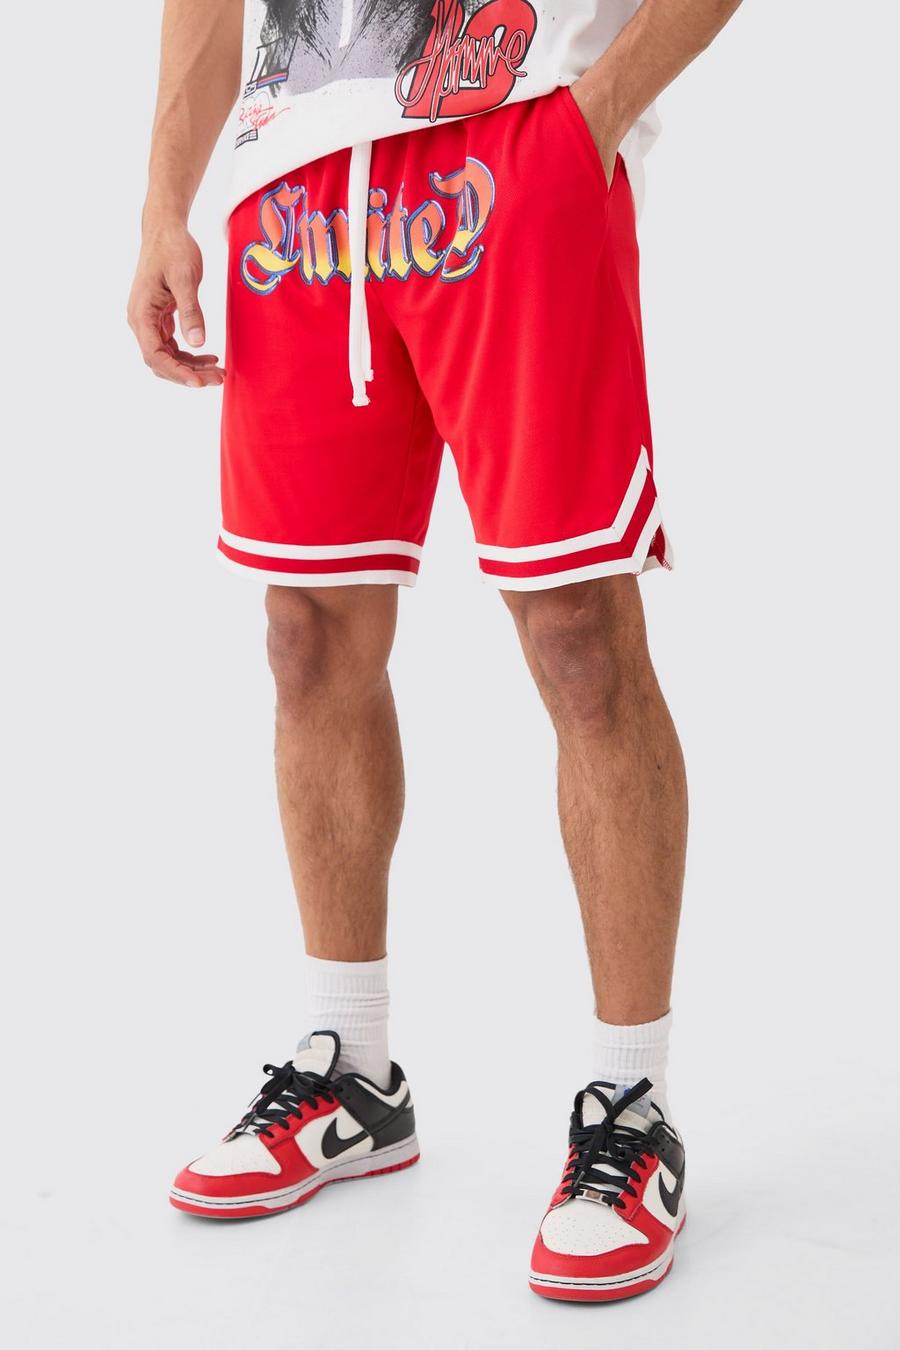 Pantalón corto holgado de malla estilo baloncesto Limited, Red